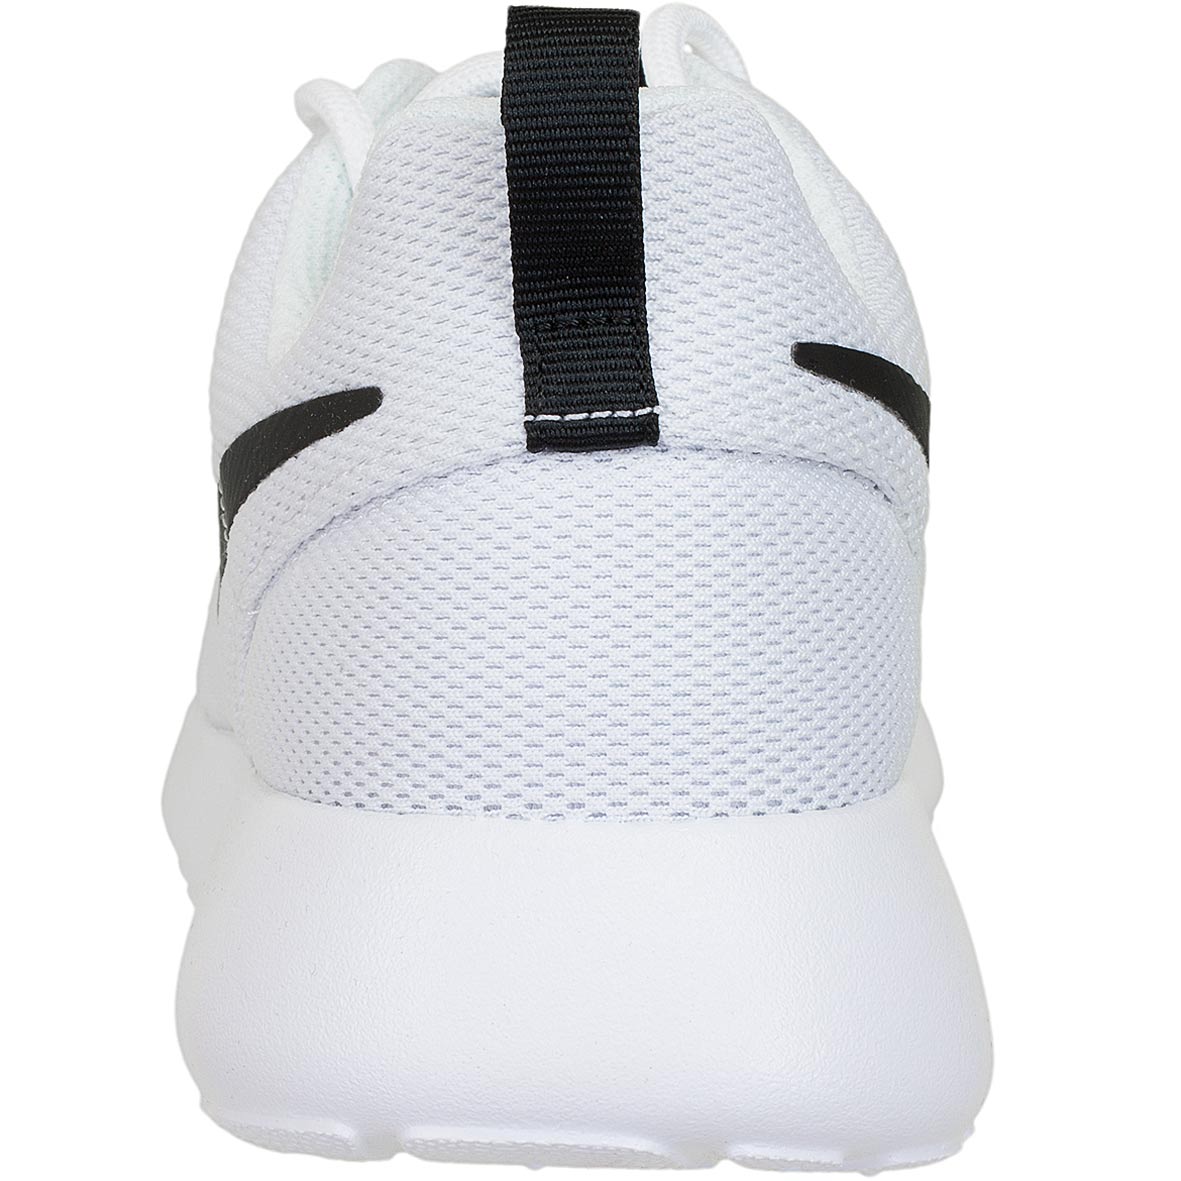 ☆ Nike Damen Sneaker Roshe One weiß/schwarz - hier bestellen!